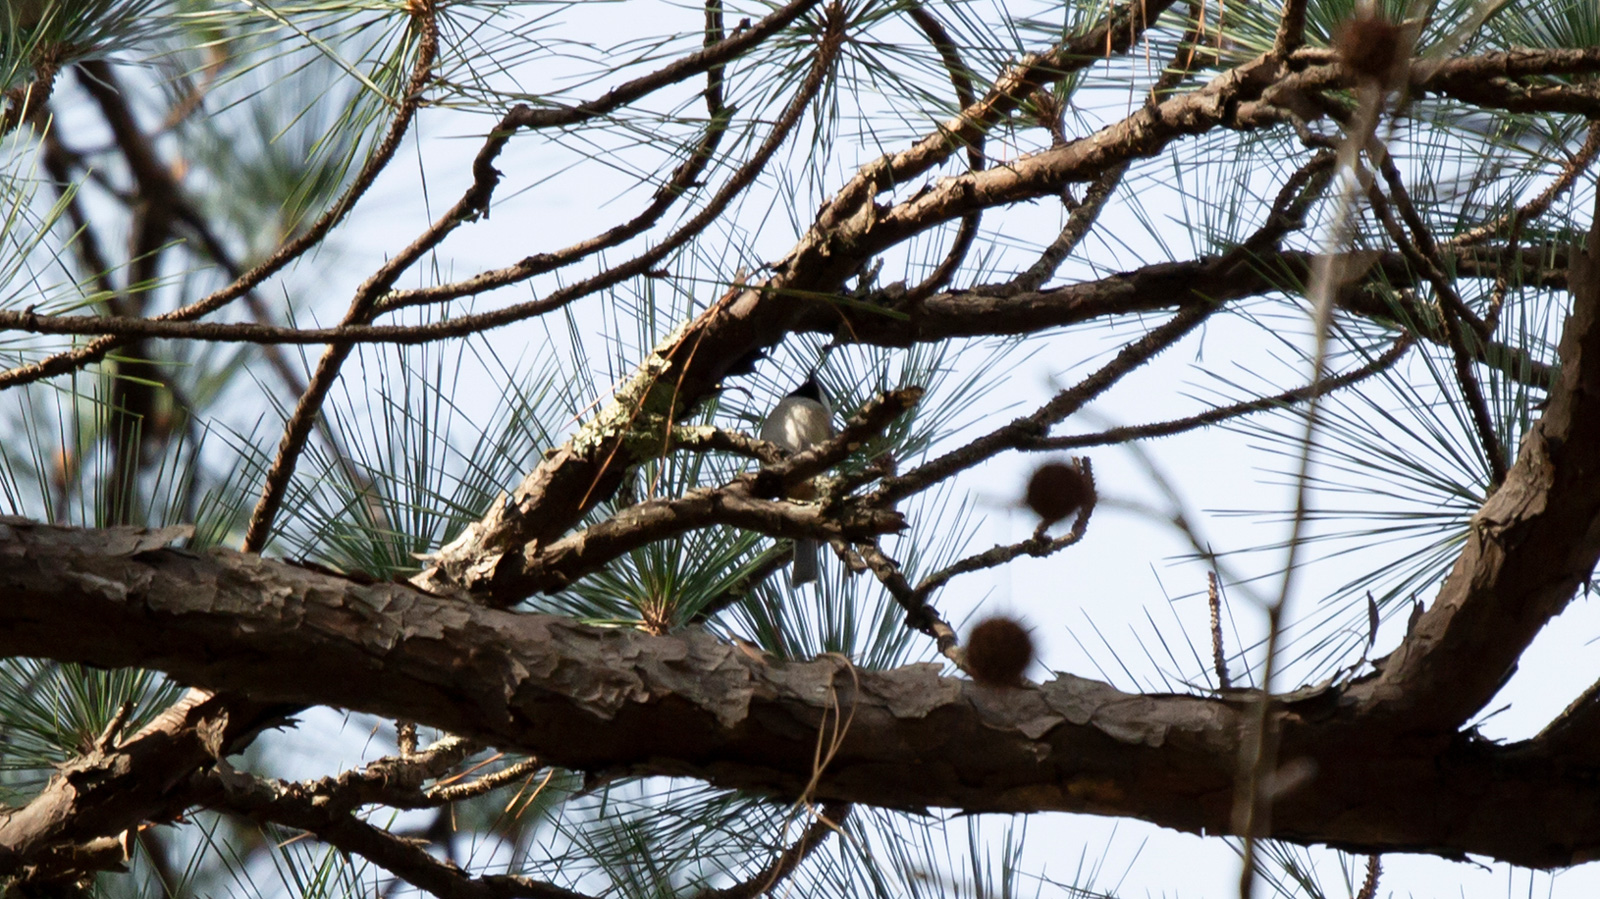 Carolina chickadee perched in a tree